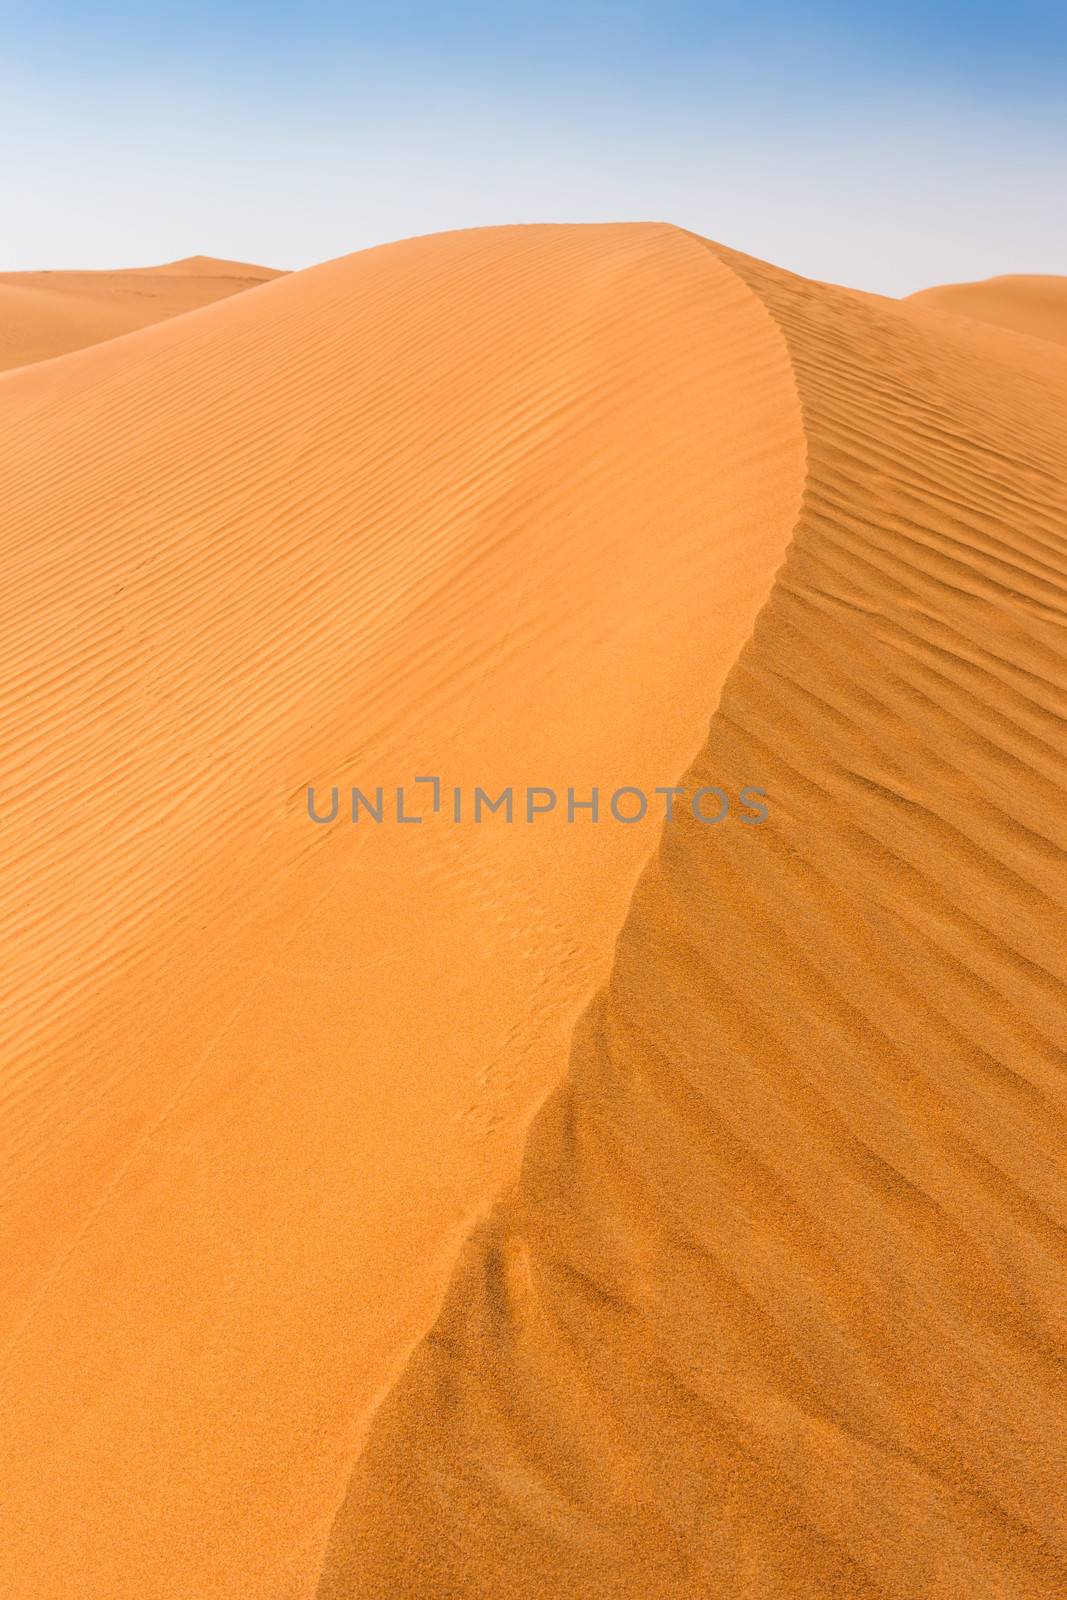 The Arabian desert on a hot sunny day